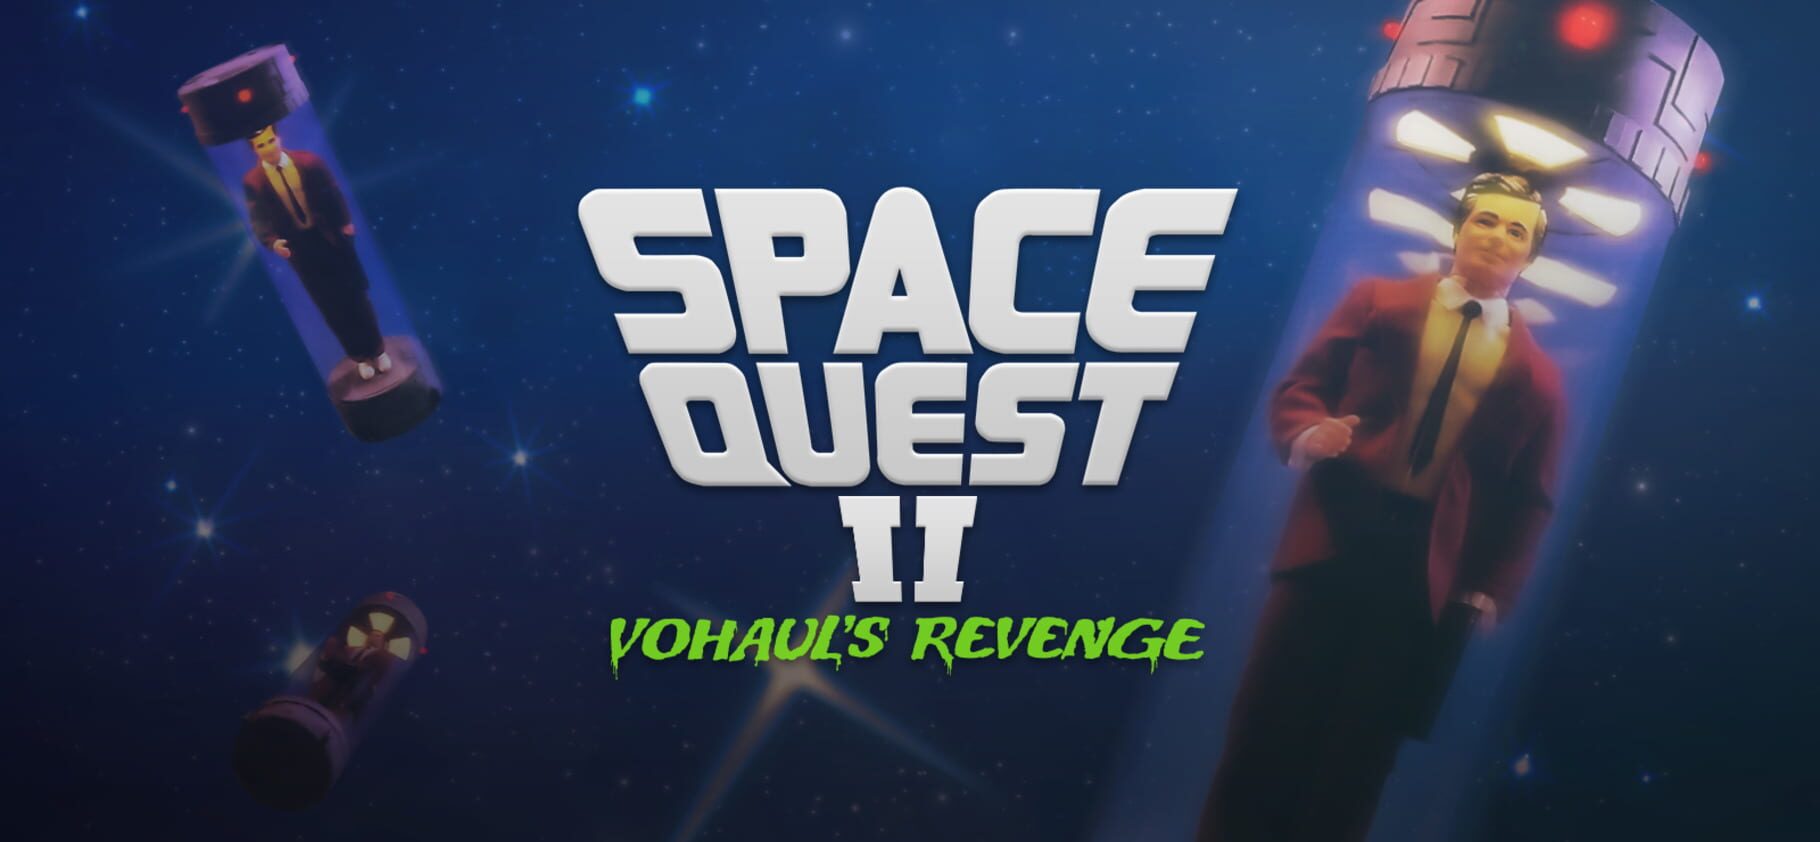 Arte - Space Quest II: Vohaul's Revenge